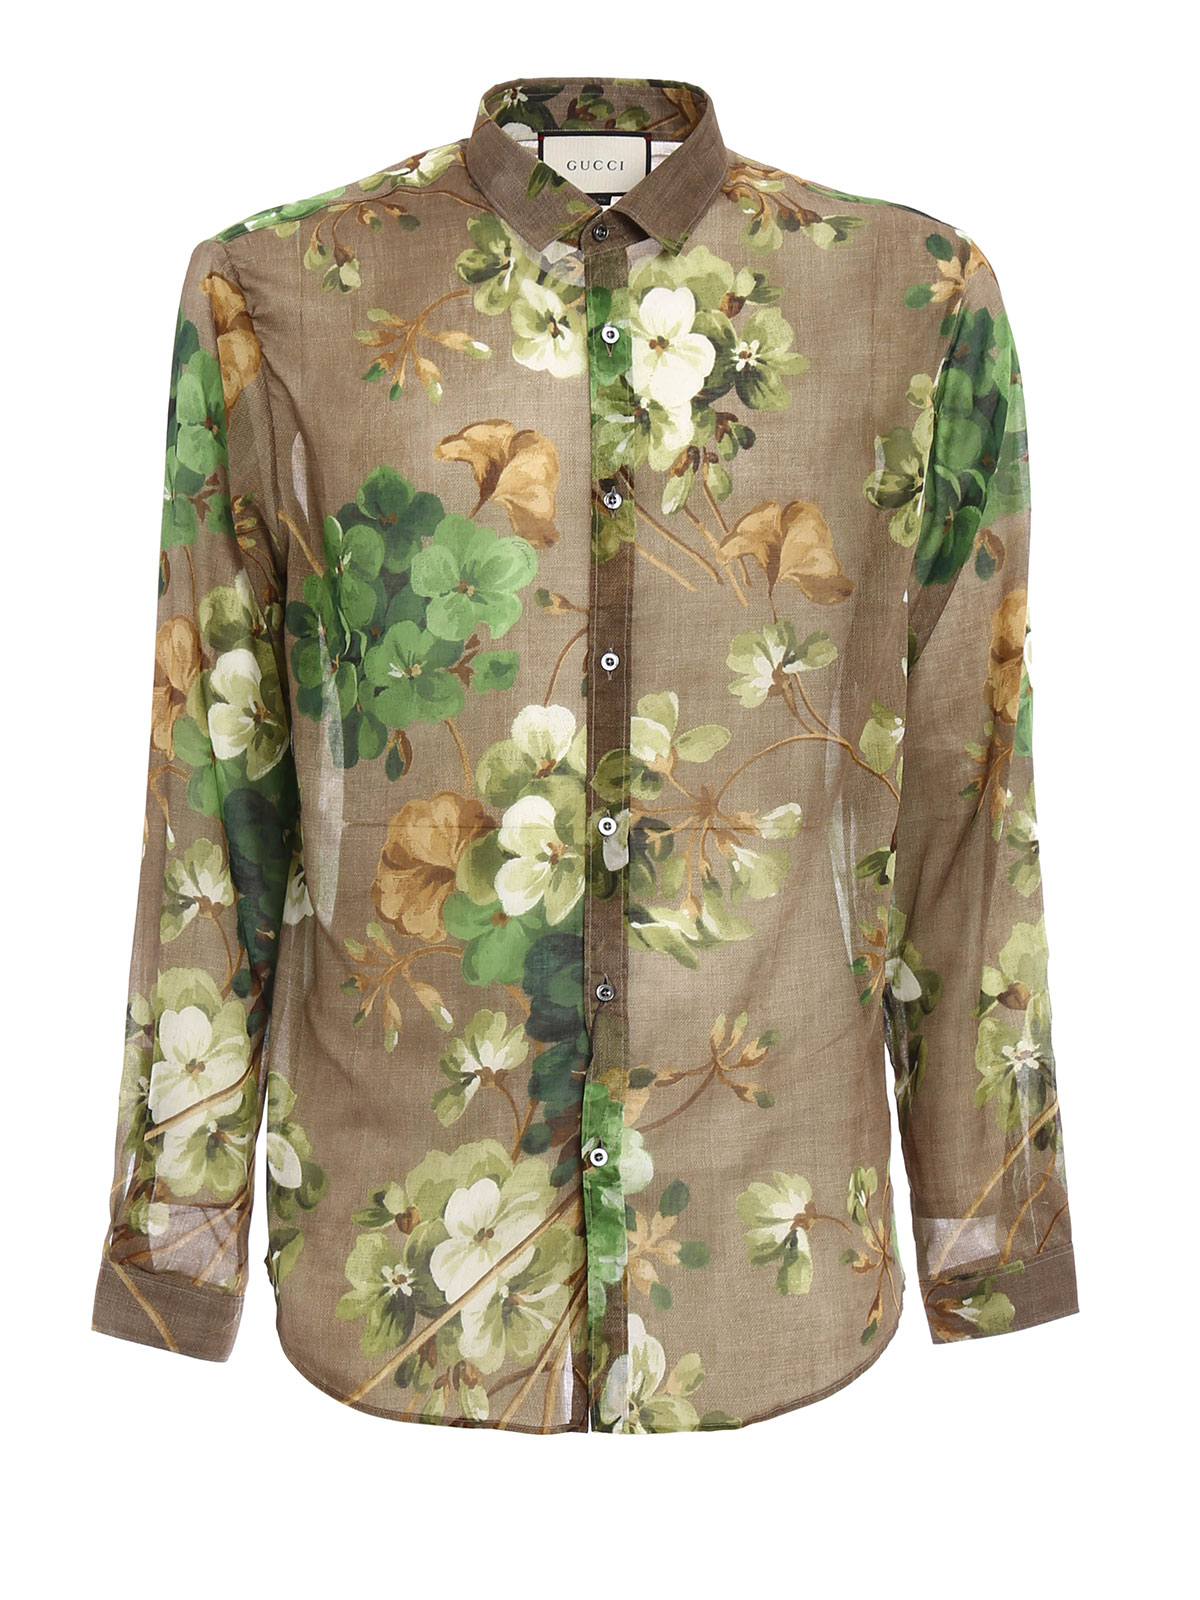 Gucci - Duke blooms print shirt 